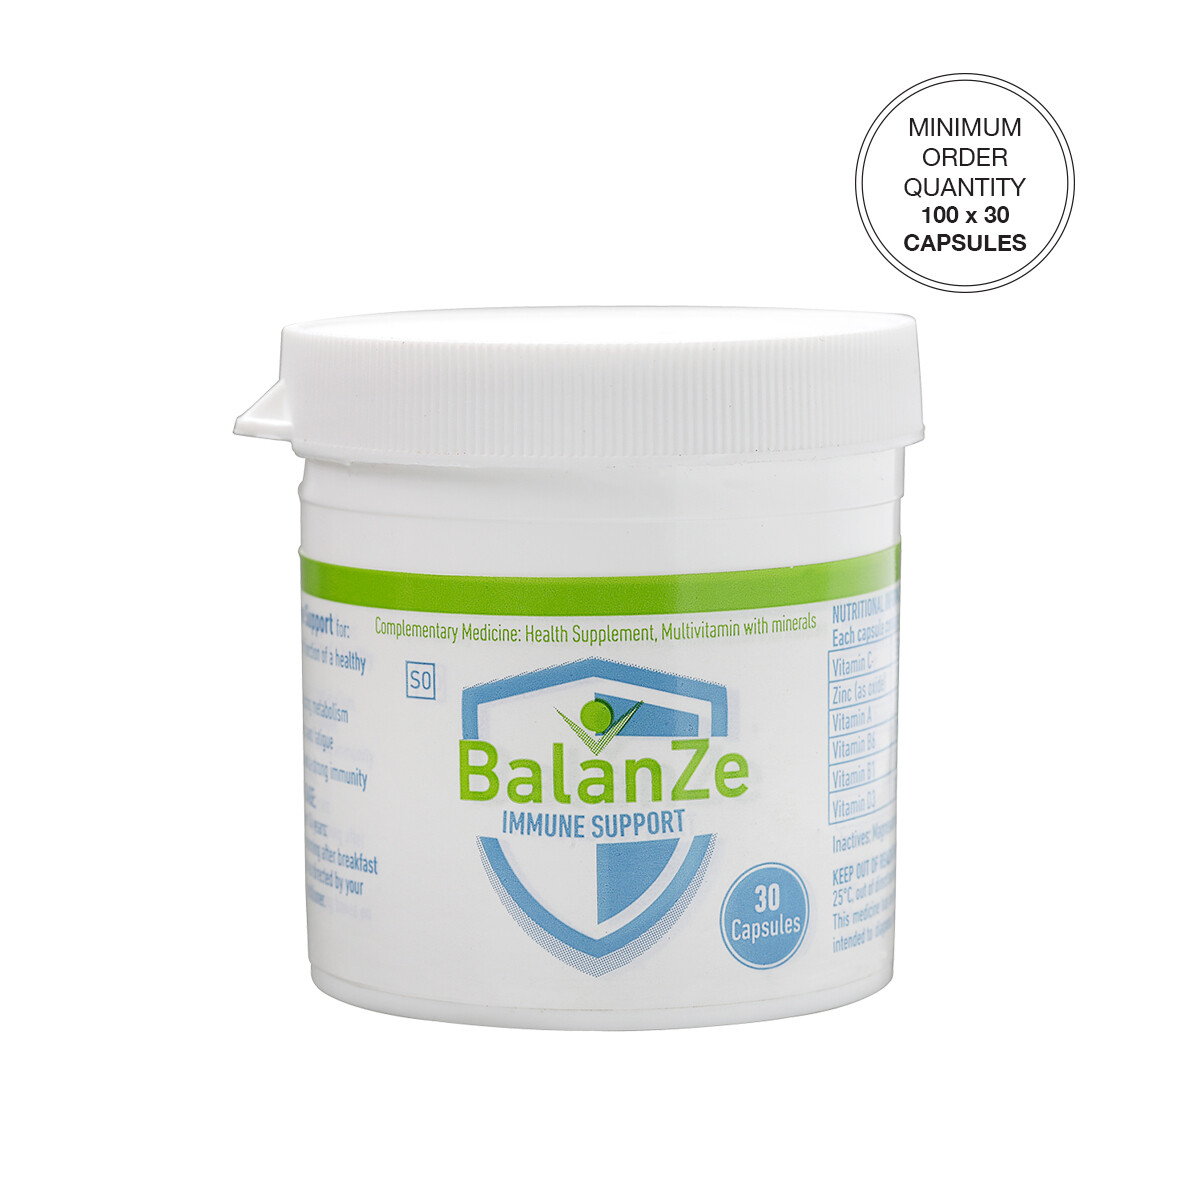 BalanZe Immune Support [Min. order 100 x 30's]